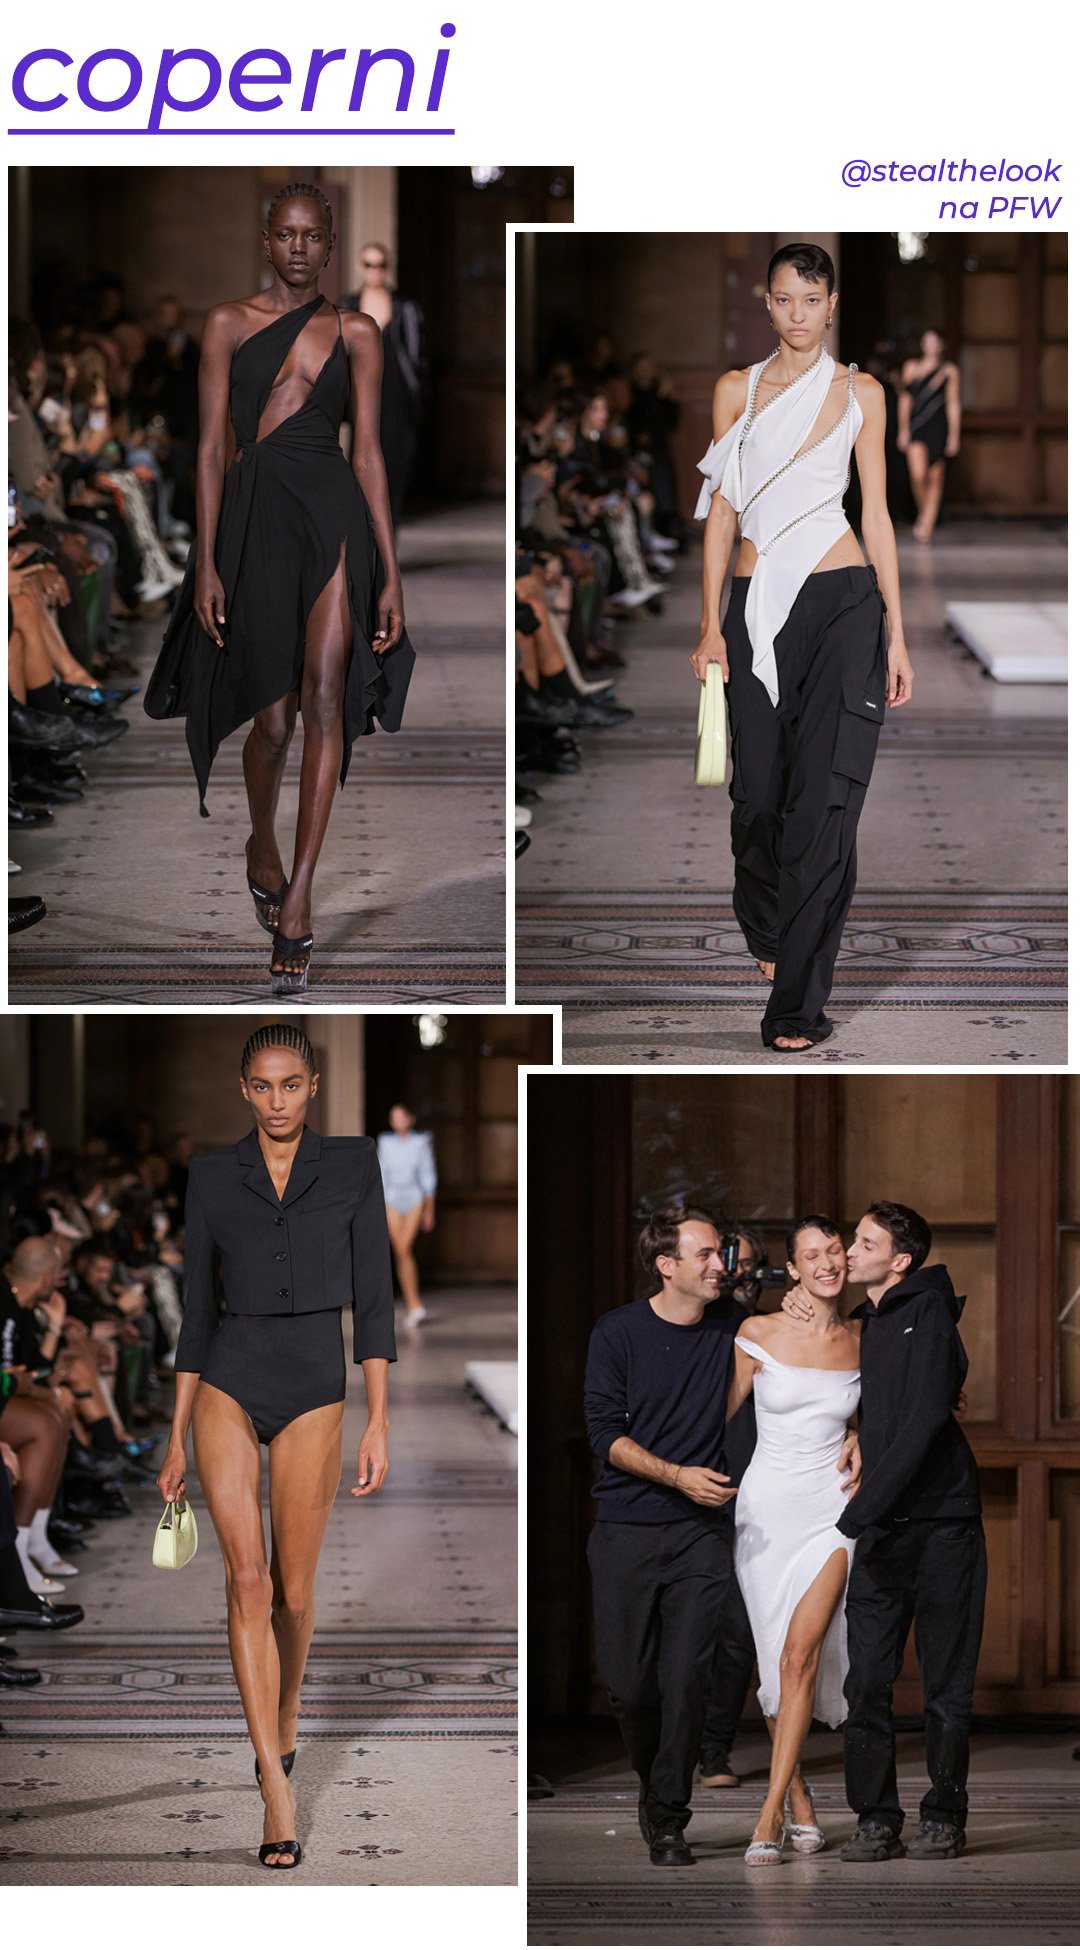 Coperni S/S 2023 - roupas diversas - Paris Fashion Week - Primavera - modelo andando pela passarela - https://stealthelook.com.br